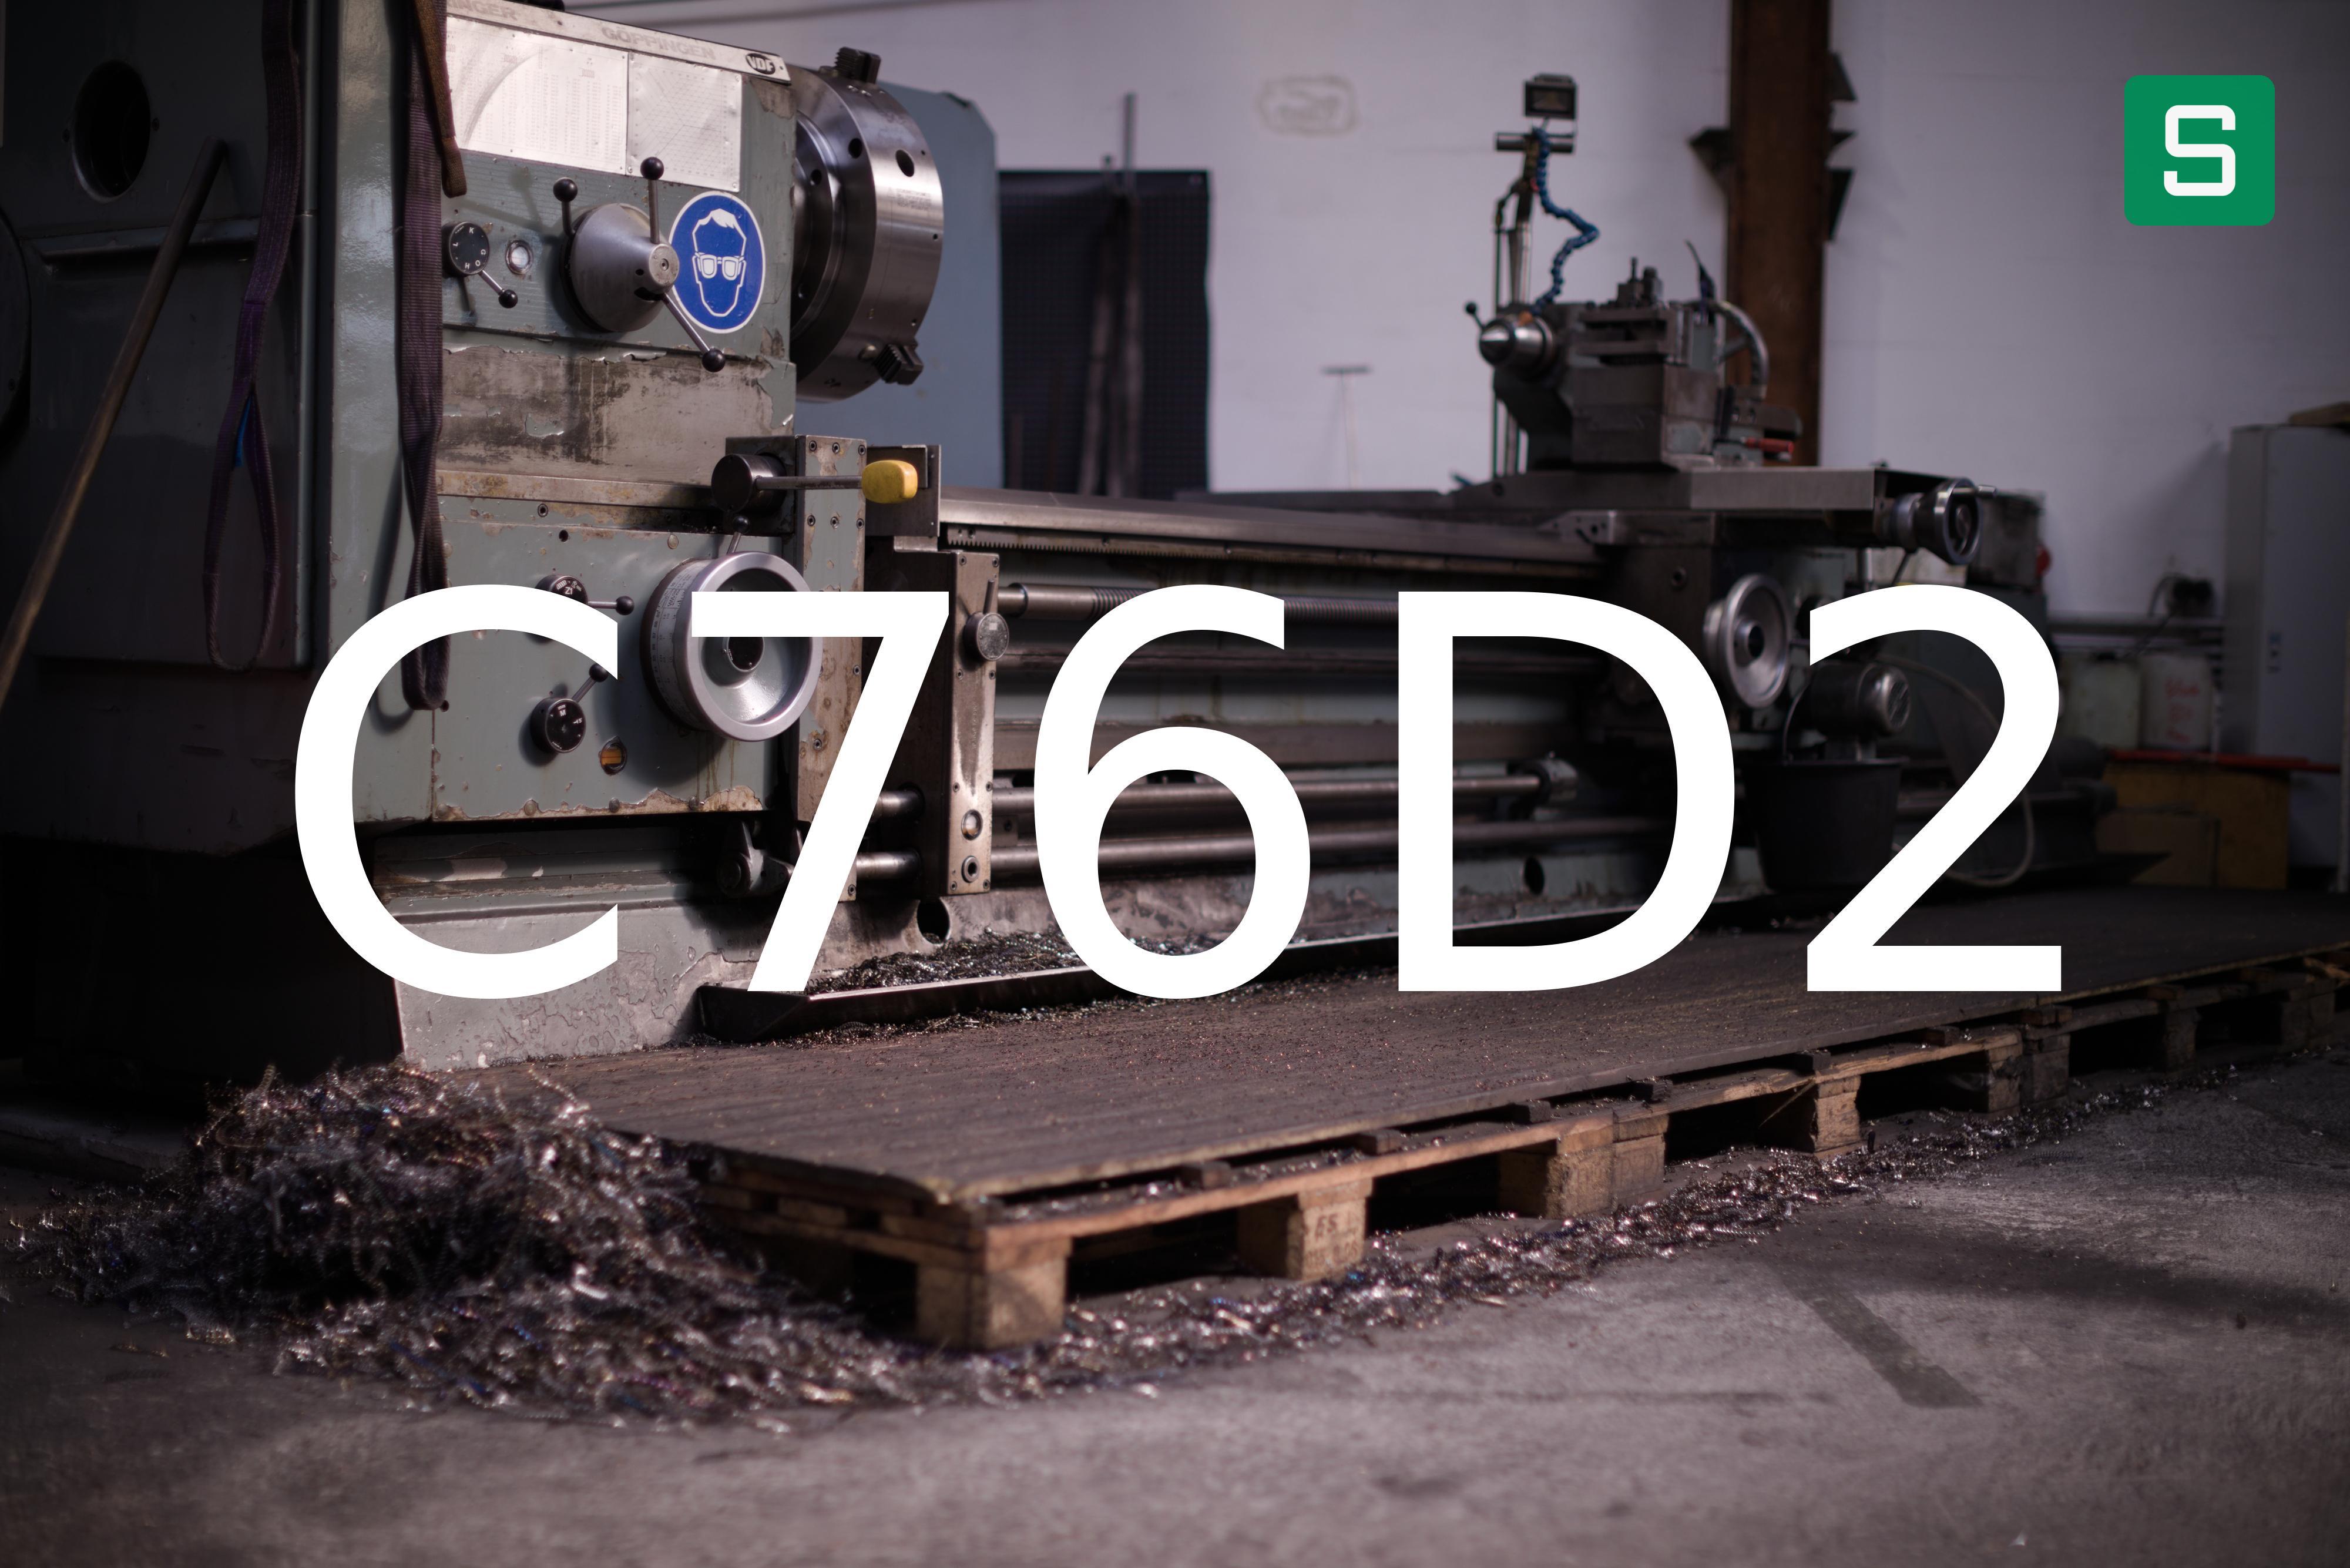 Steel Material: C76D2